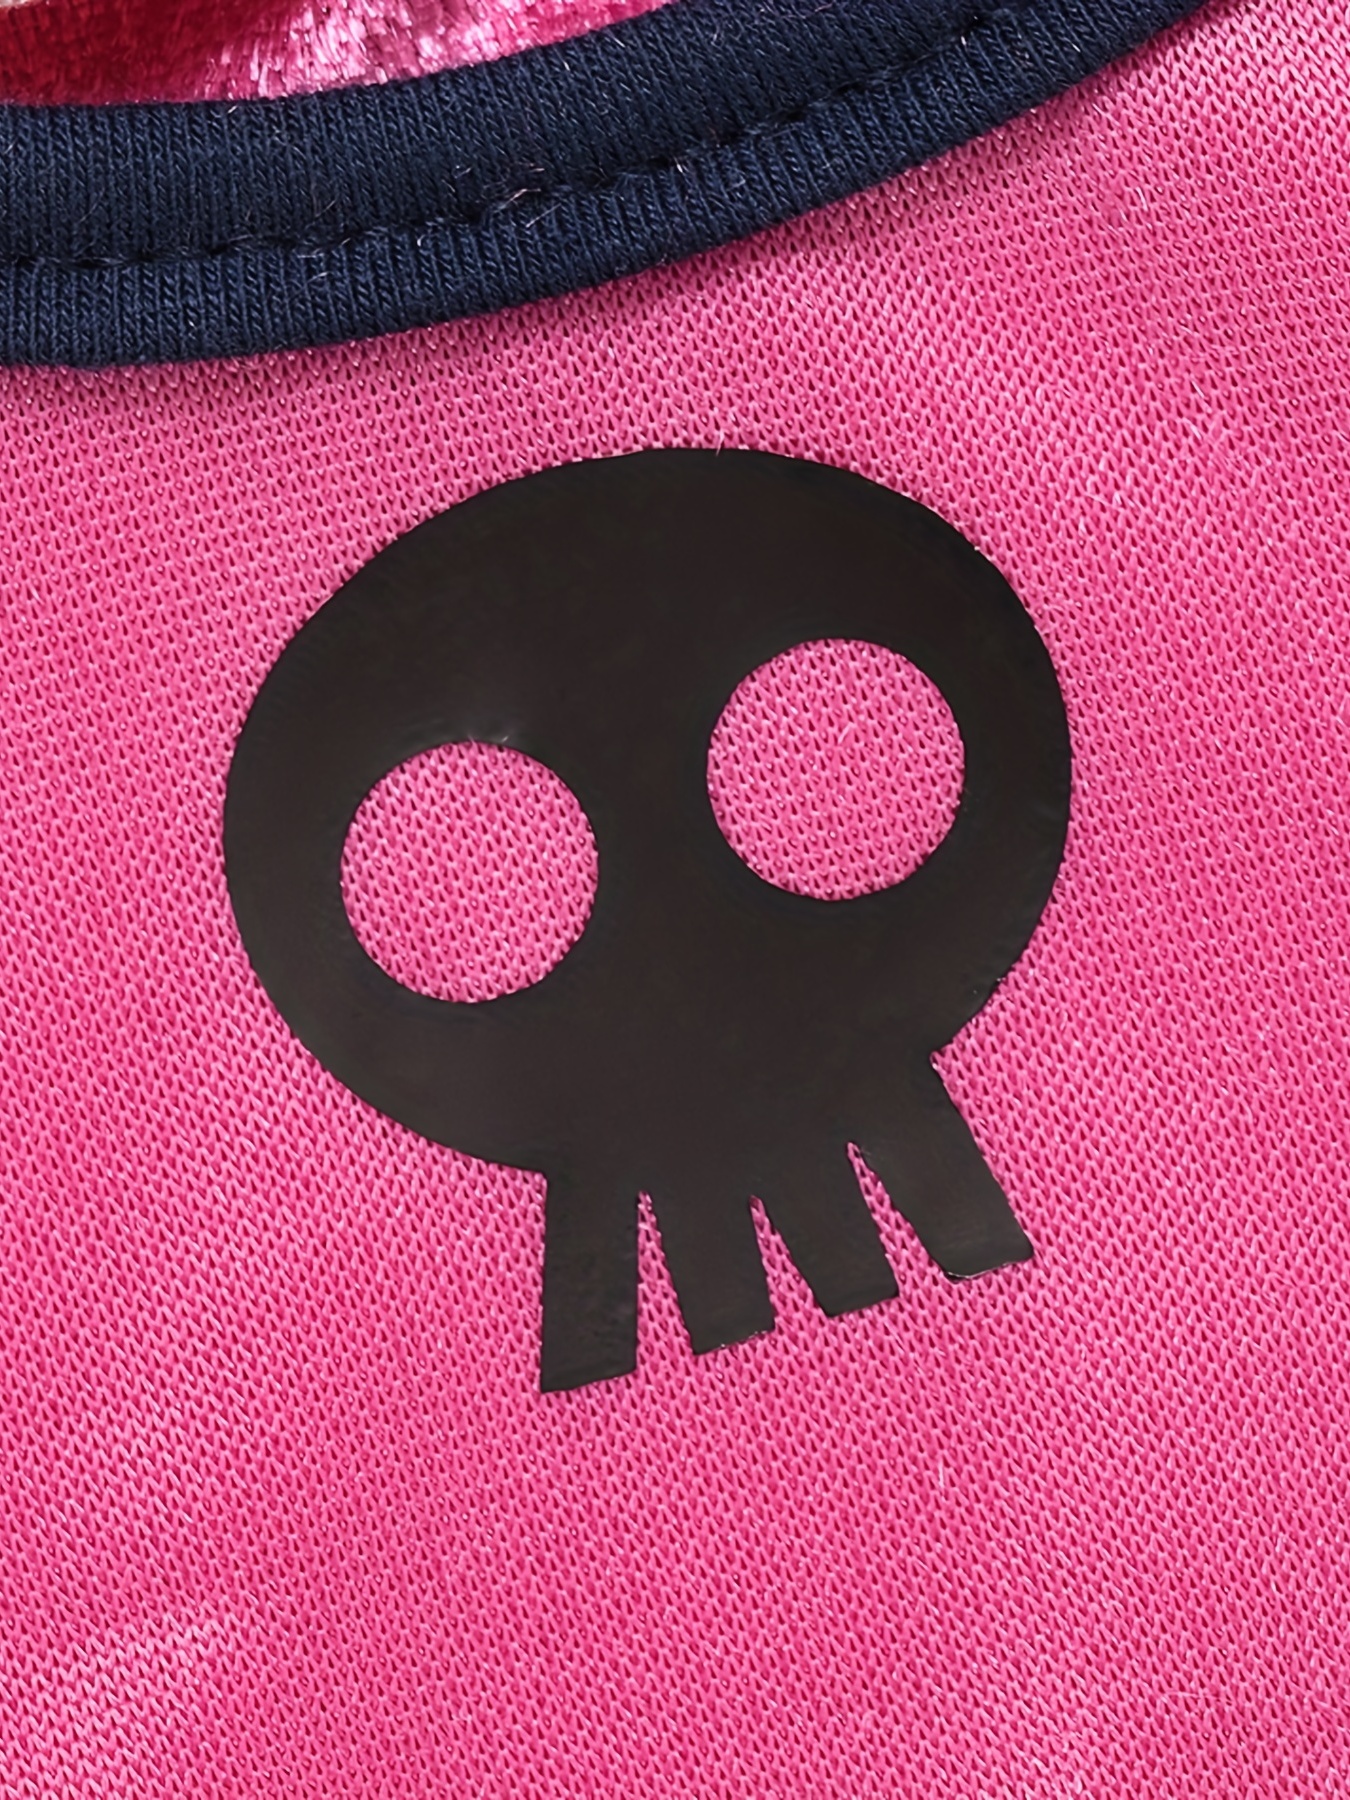 Free Roblox T-shirt hot pink and black spiderweb dress